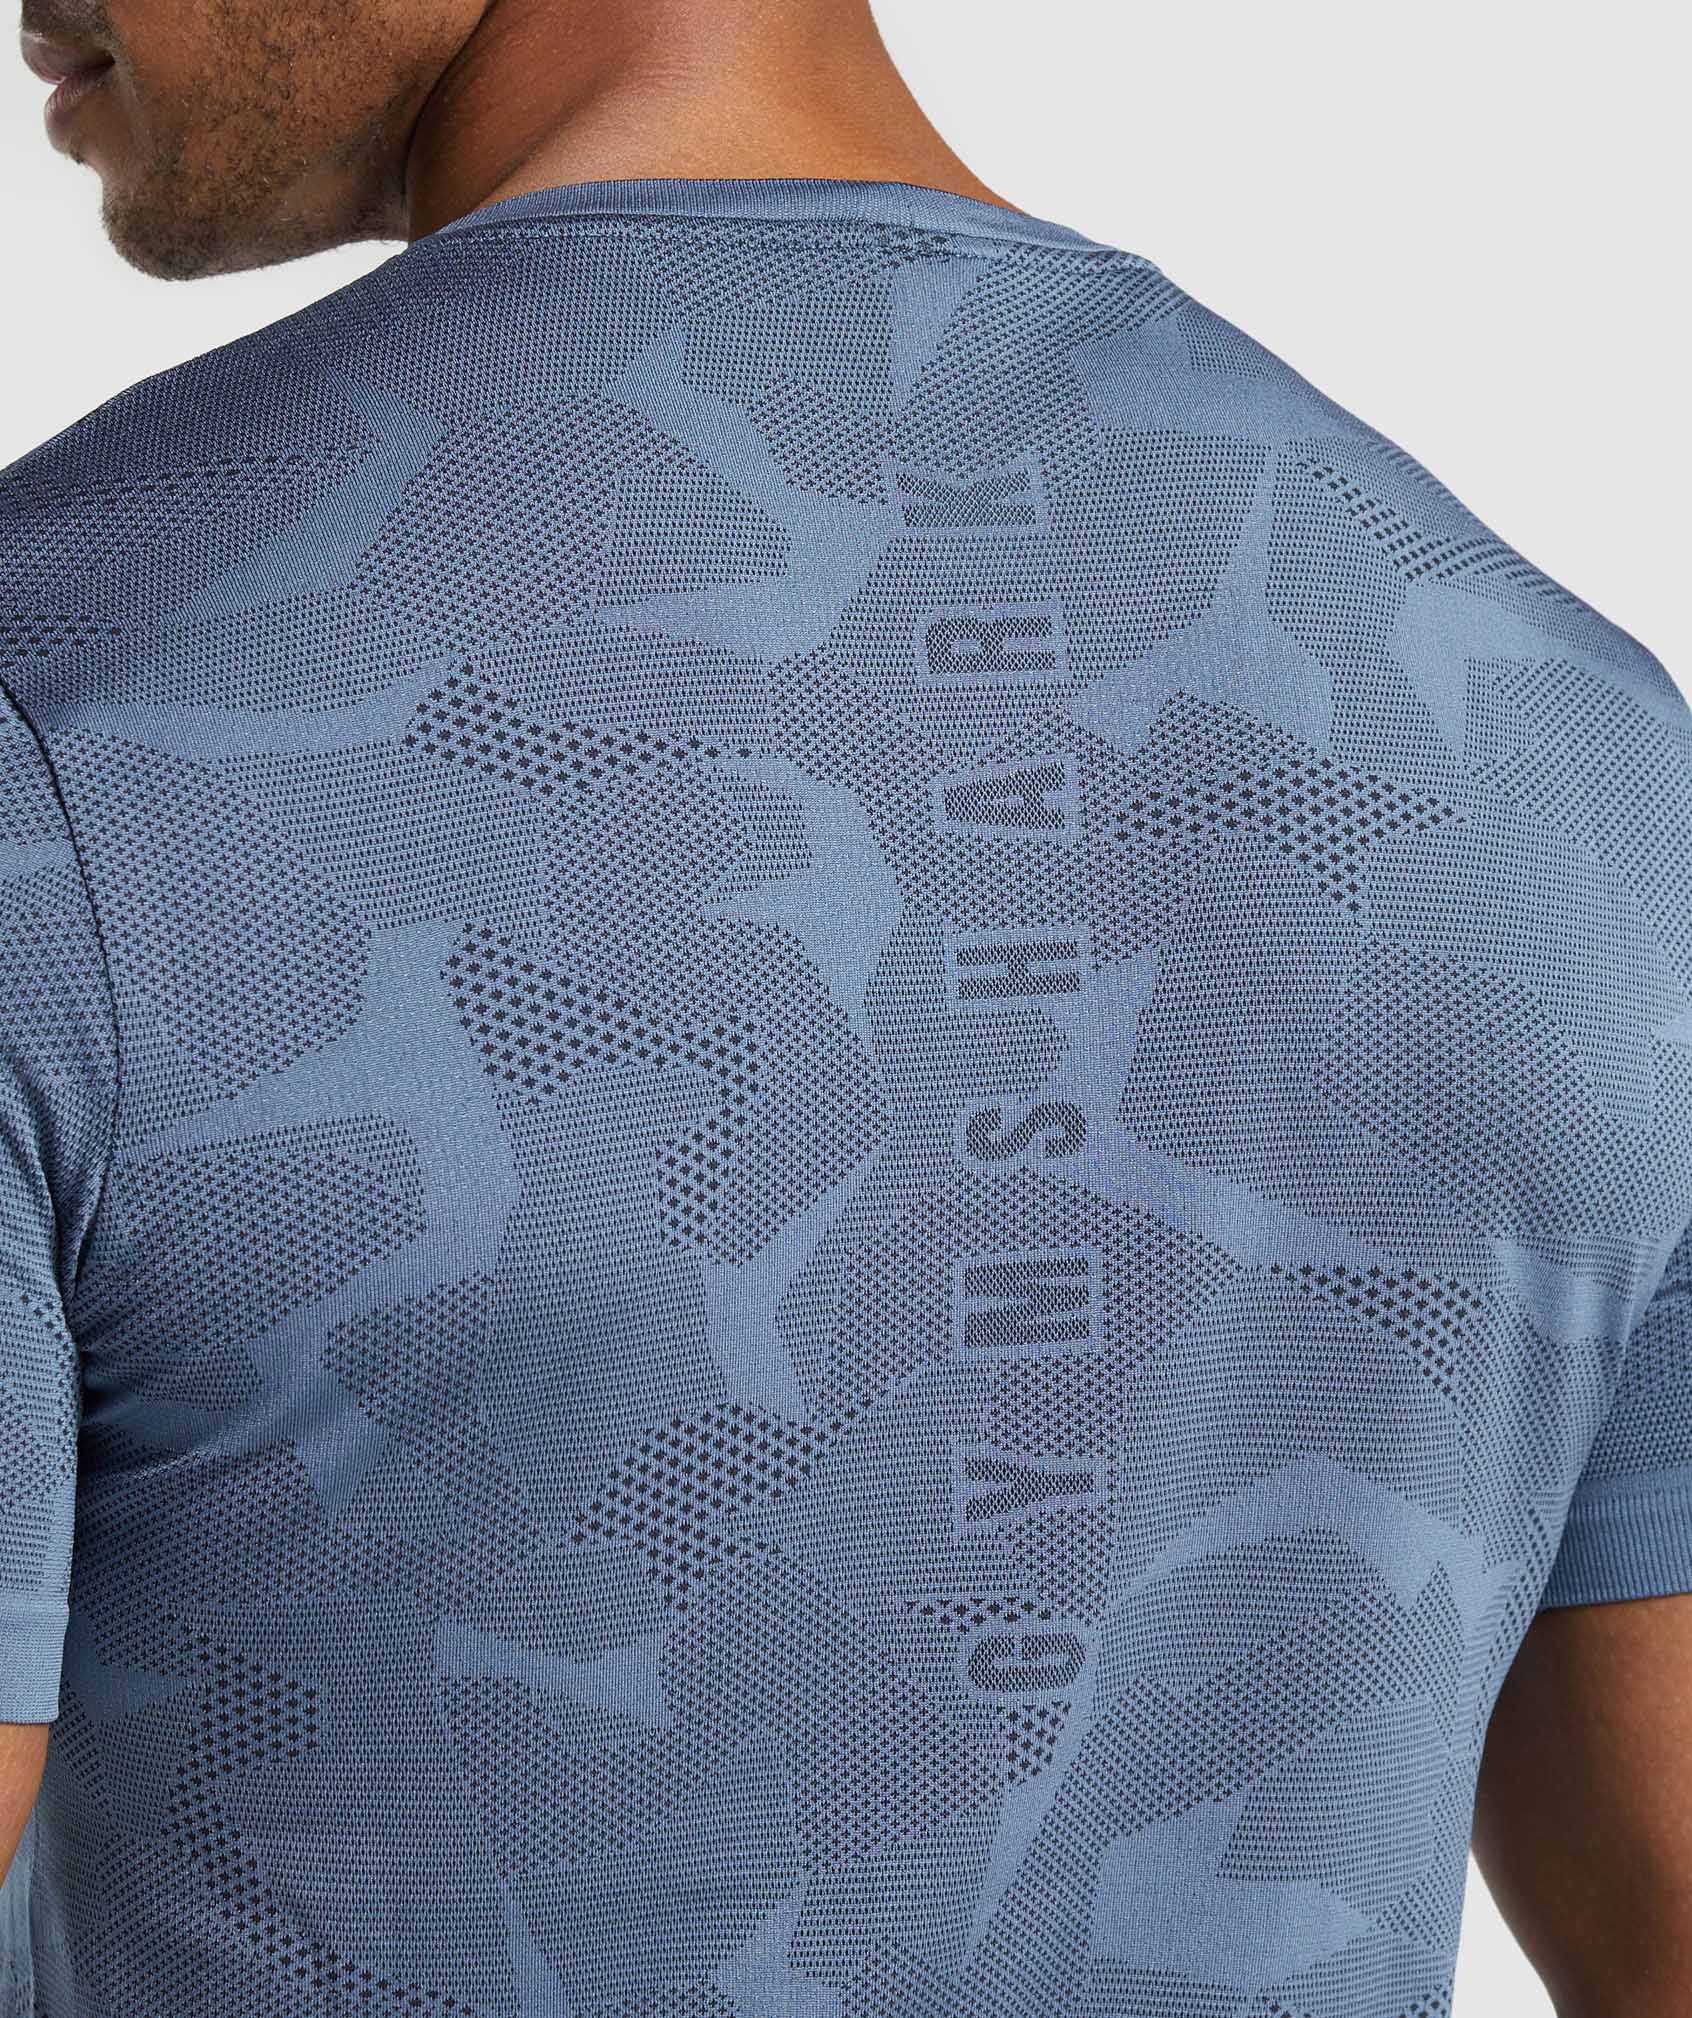 Gymshark Geo Seamless T-Shirt - Faded Blue/Titanium Blue